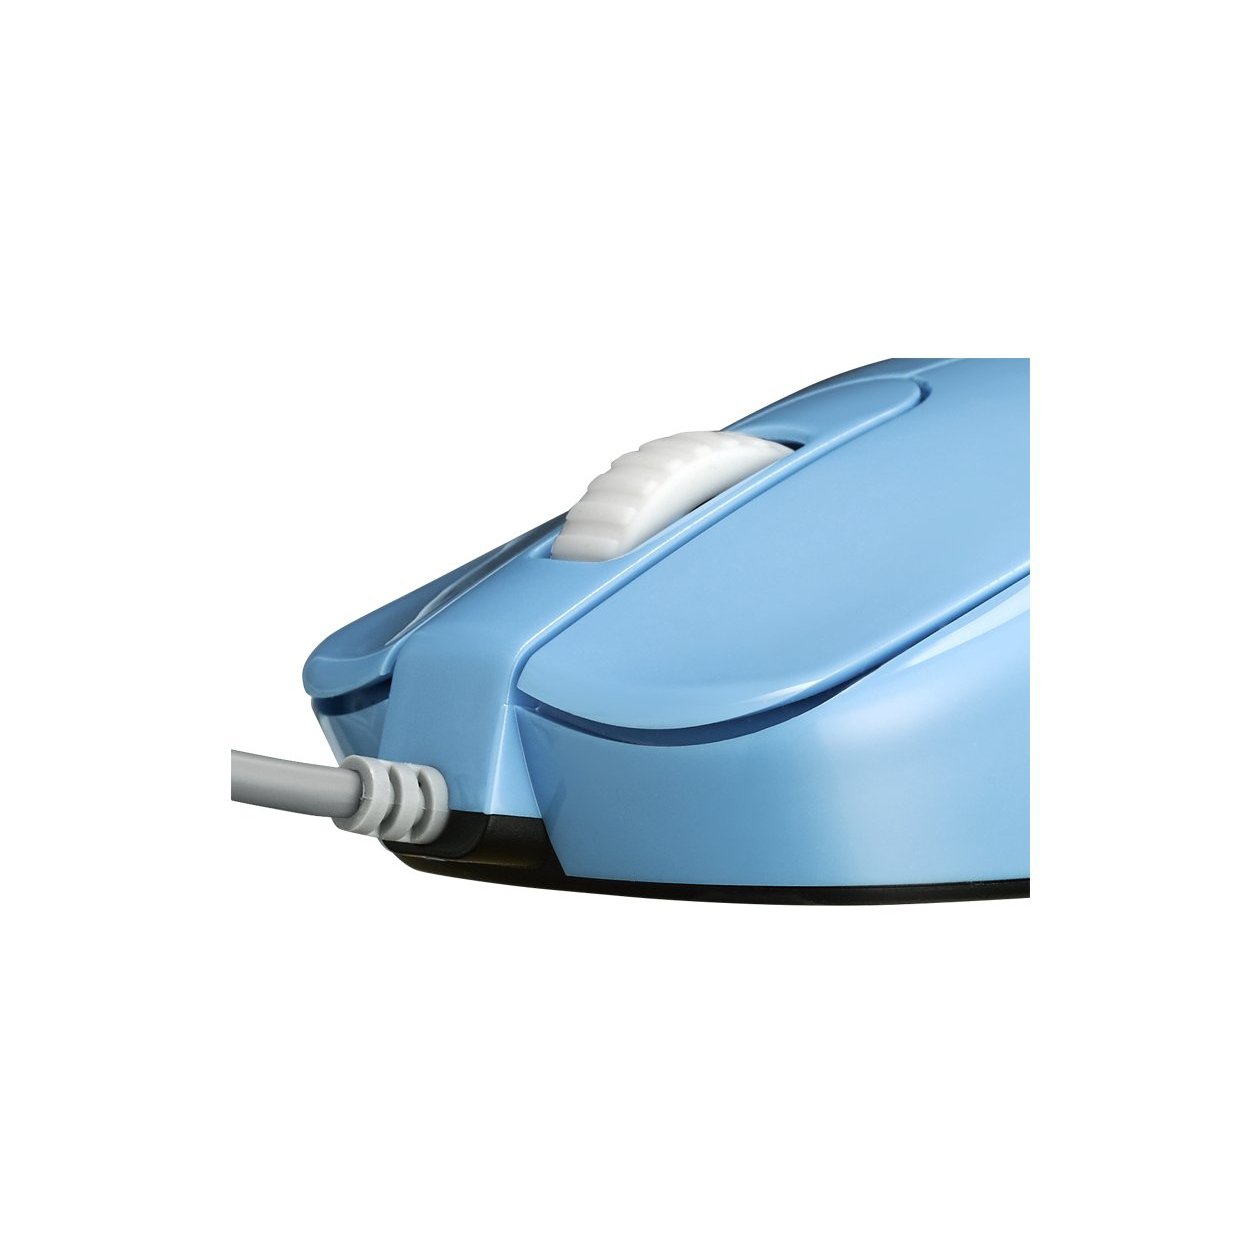 ZOWIE S2 DIVINA BLUE eSports Mouse-Addice Inc